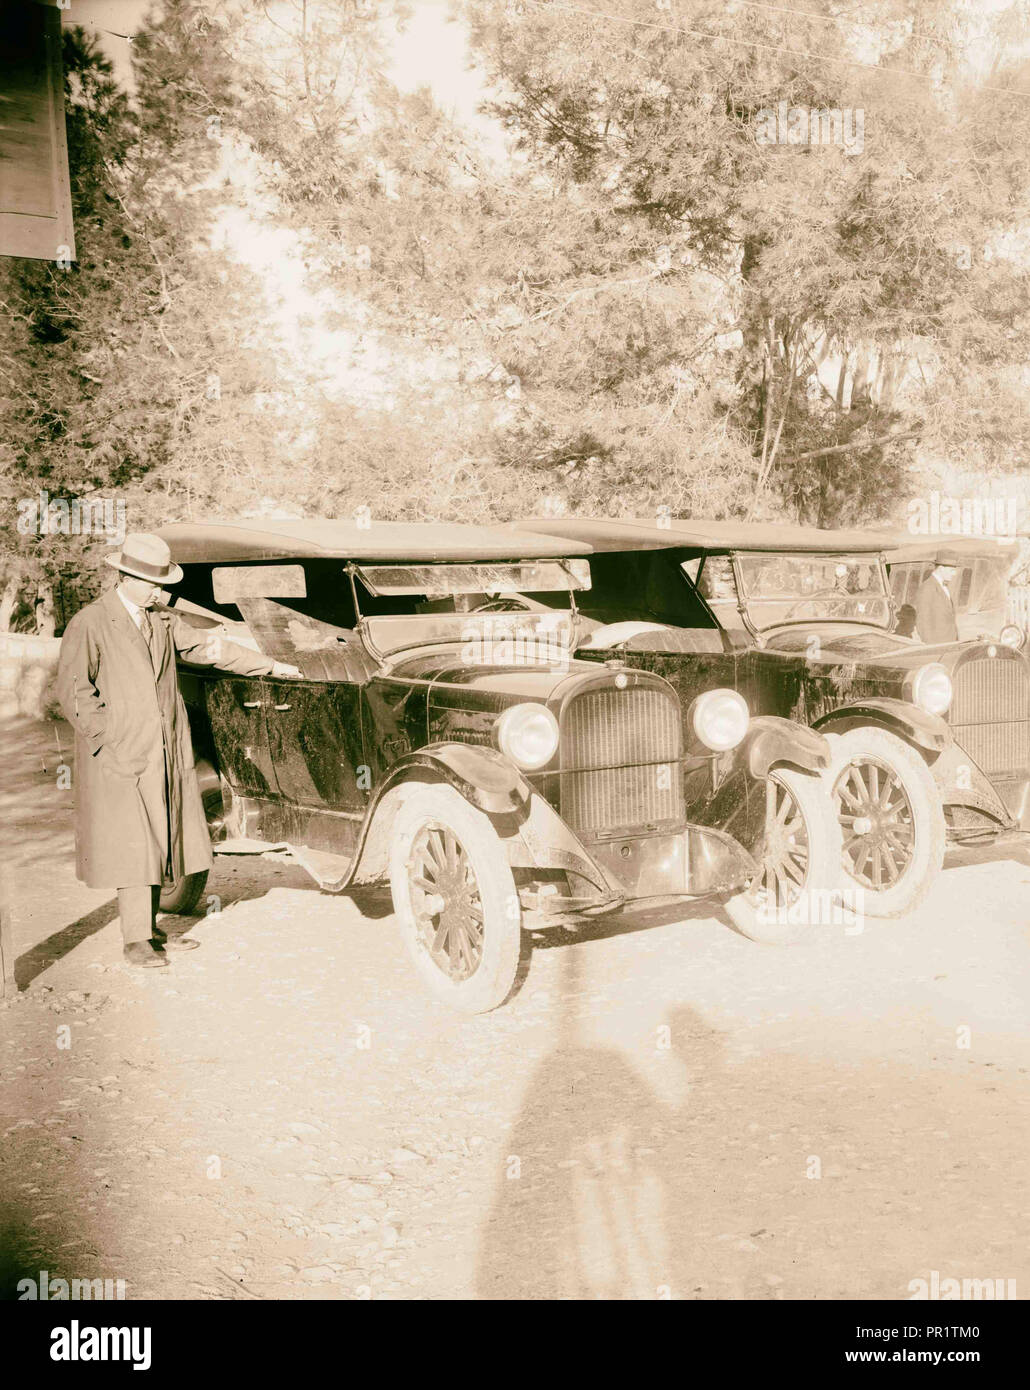 New Dodge autos in Jerusalem. 1920, Jerusalem, Israel Stock Photo